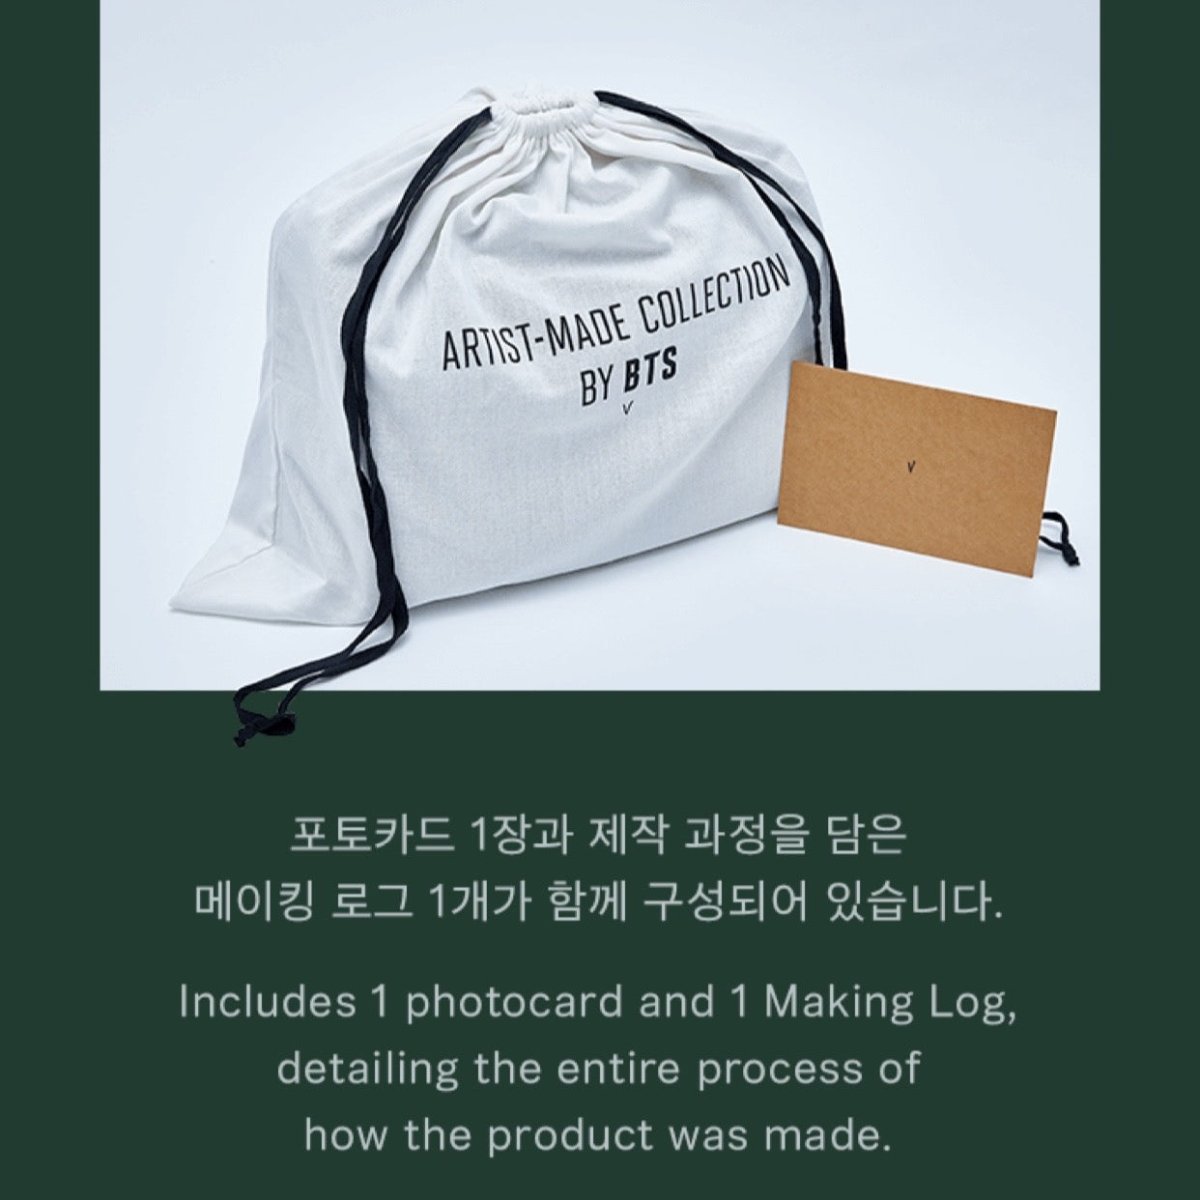 taehyung bag collection